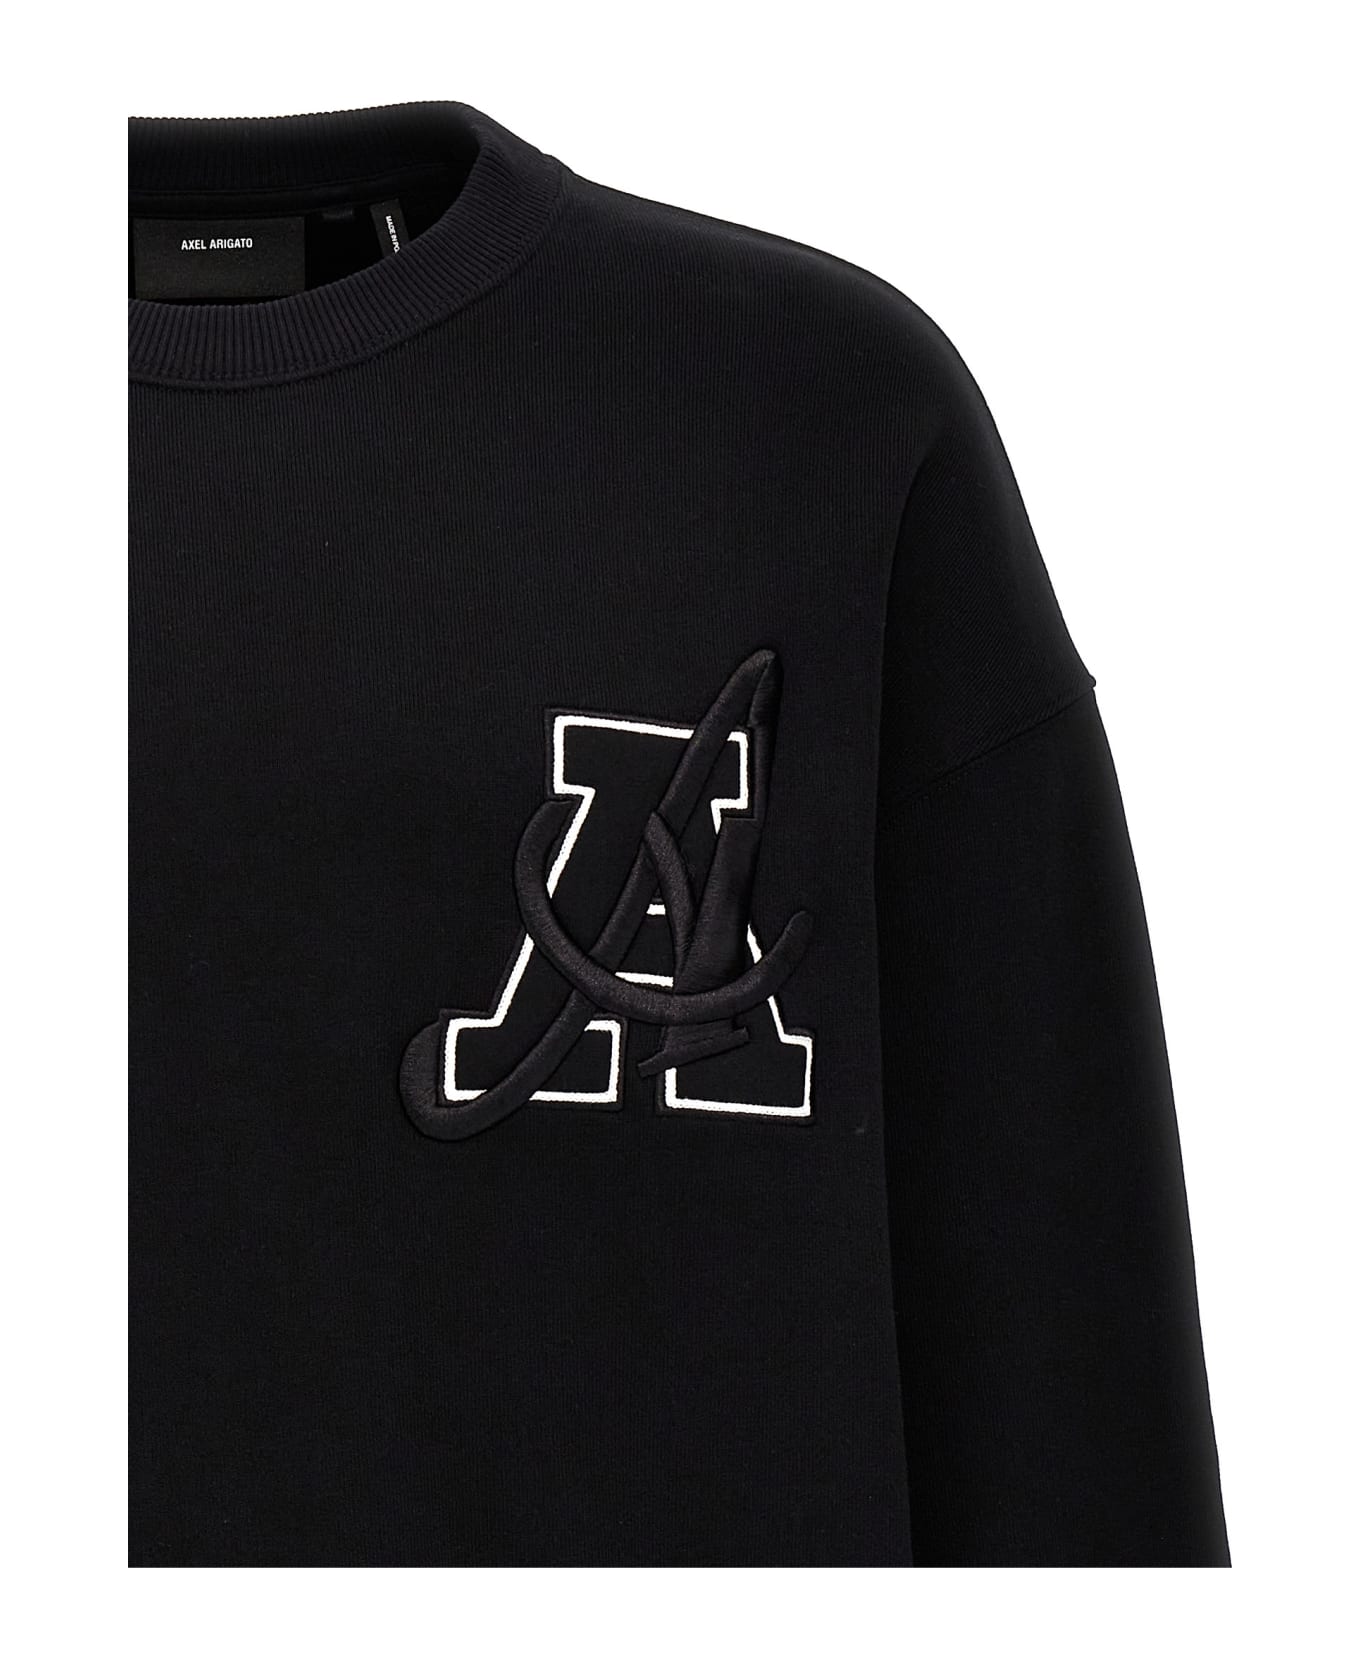 Axel Arigato 'hart' Sweatshirt - Black